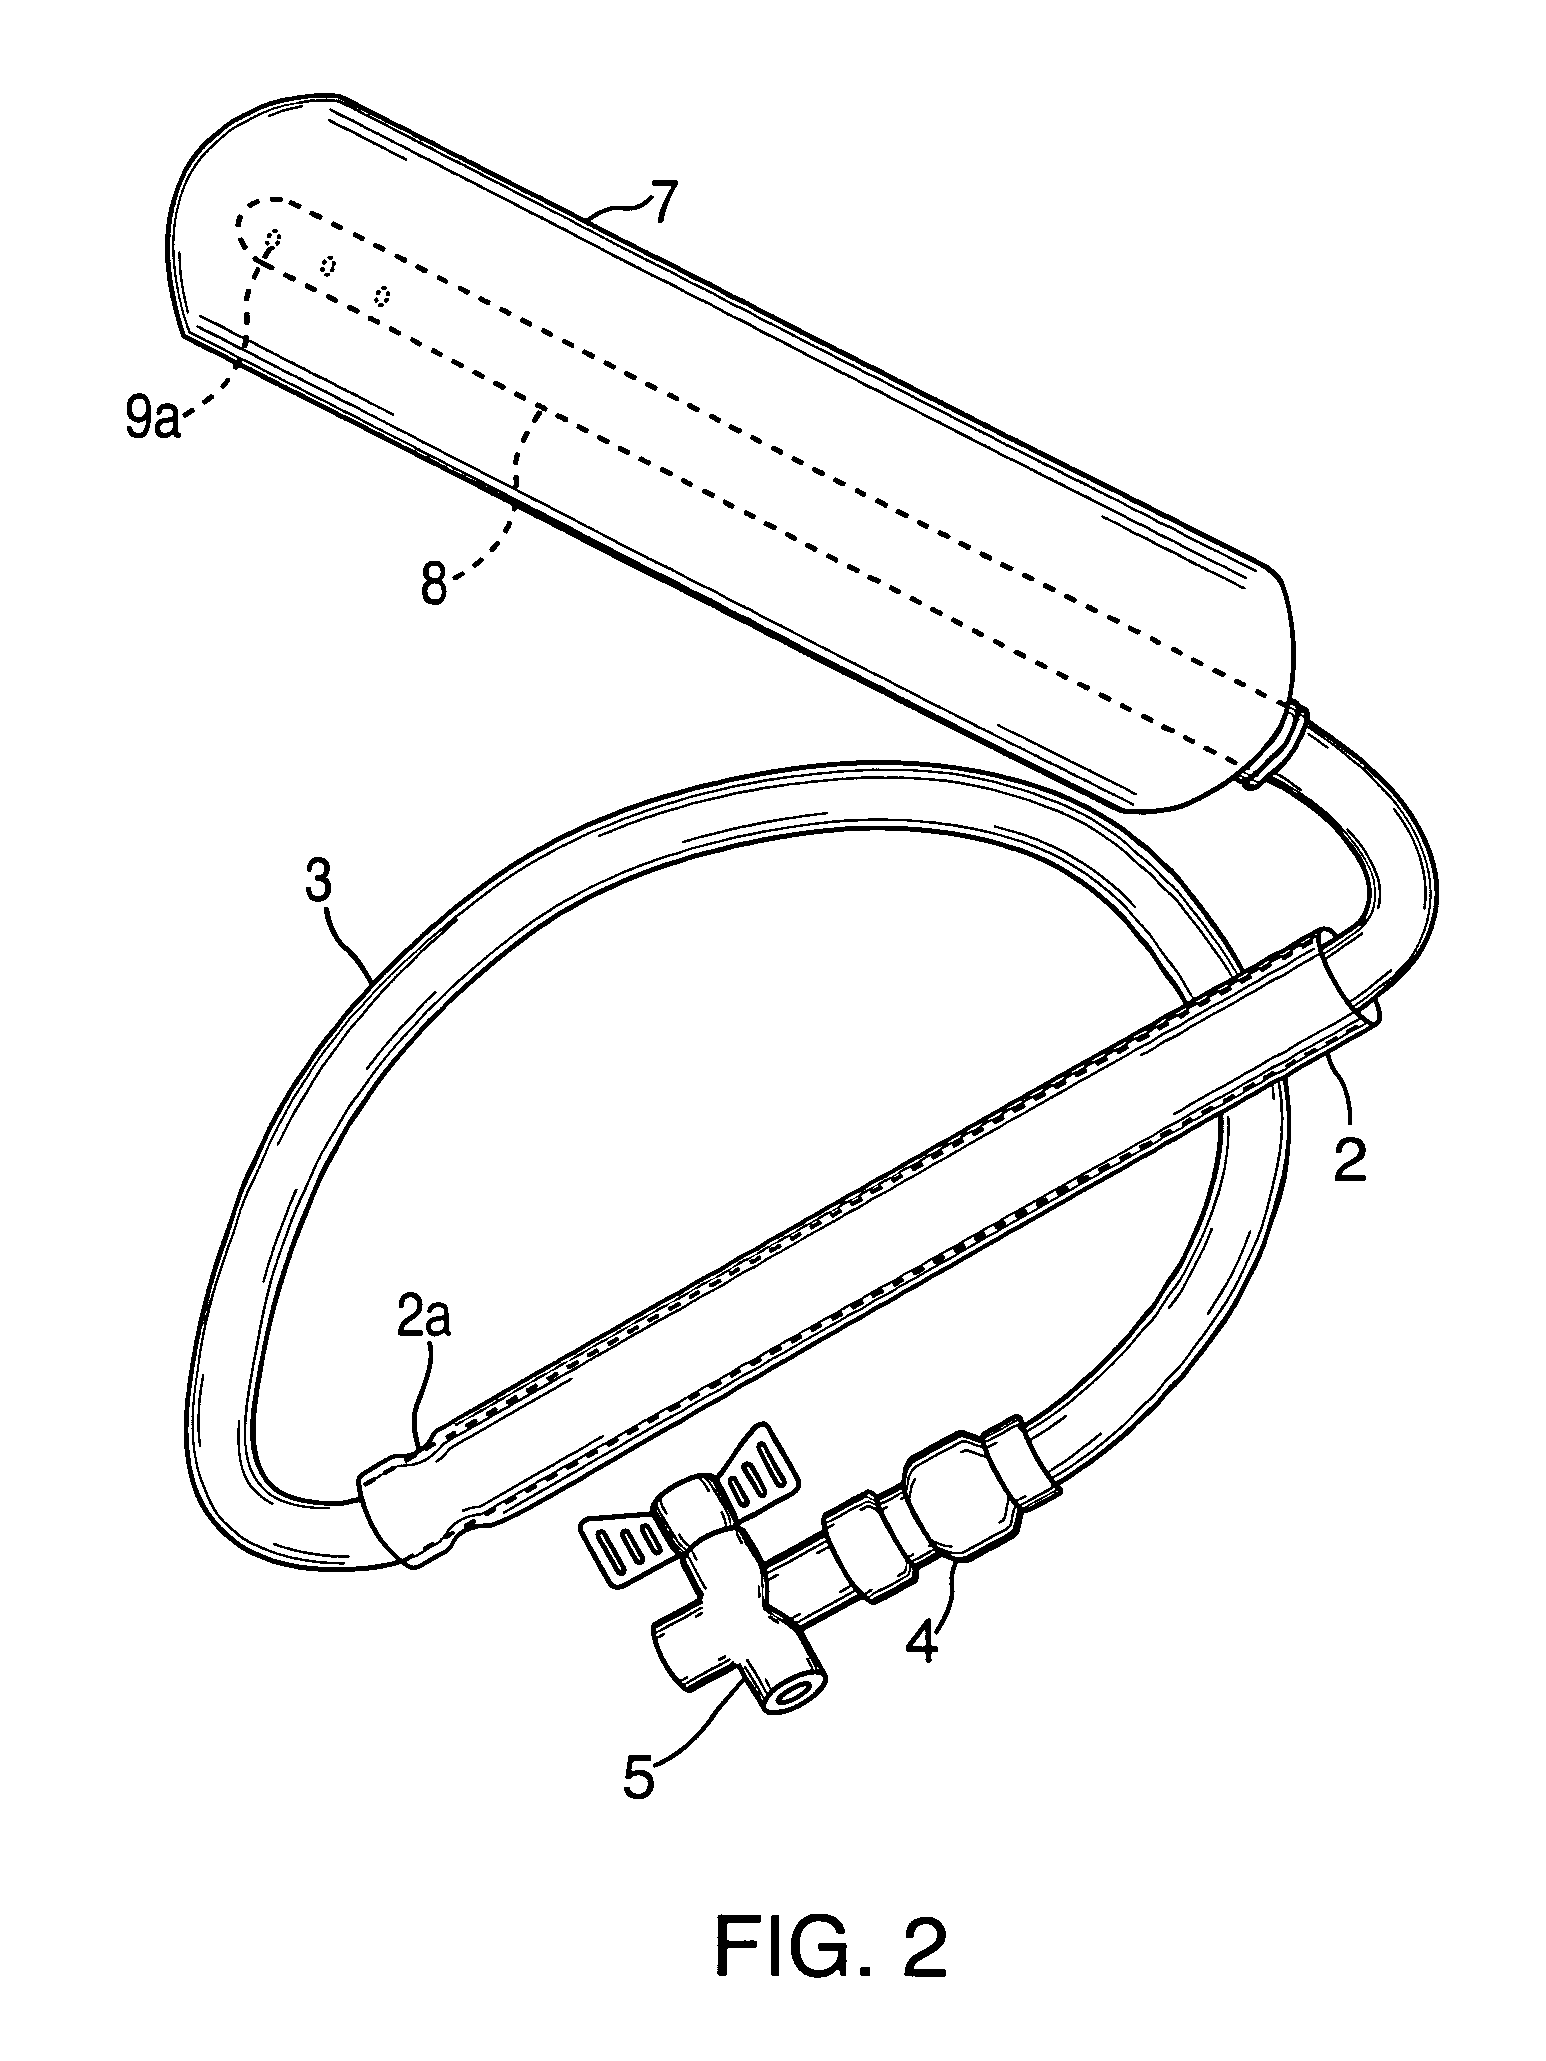 Variable rigidity vaginal dilator and use thereof